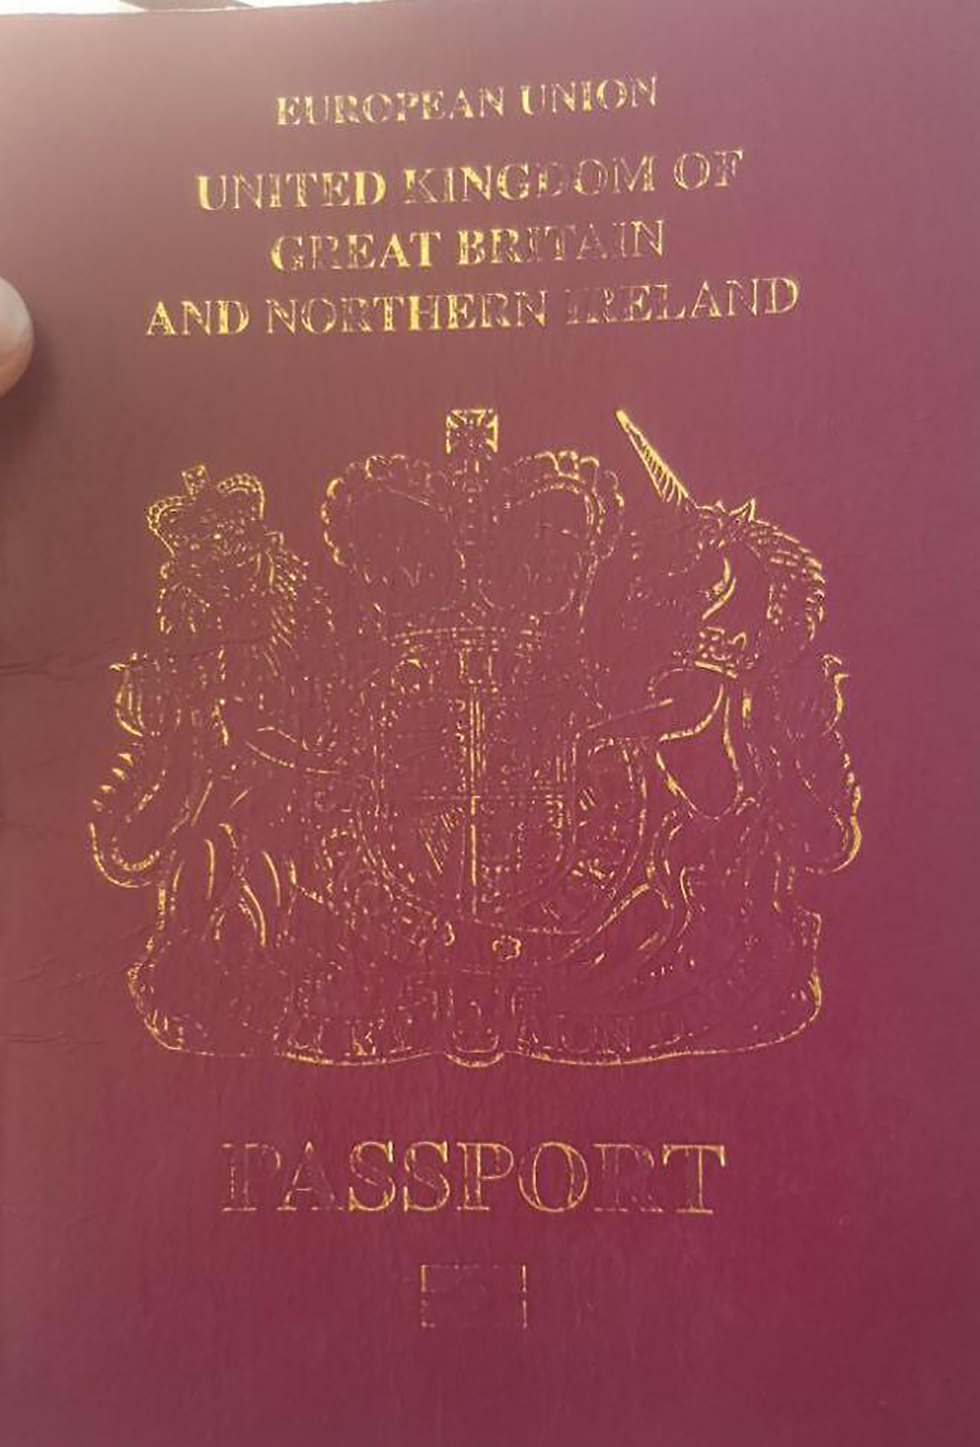 The tourist's passport